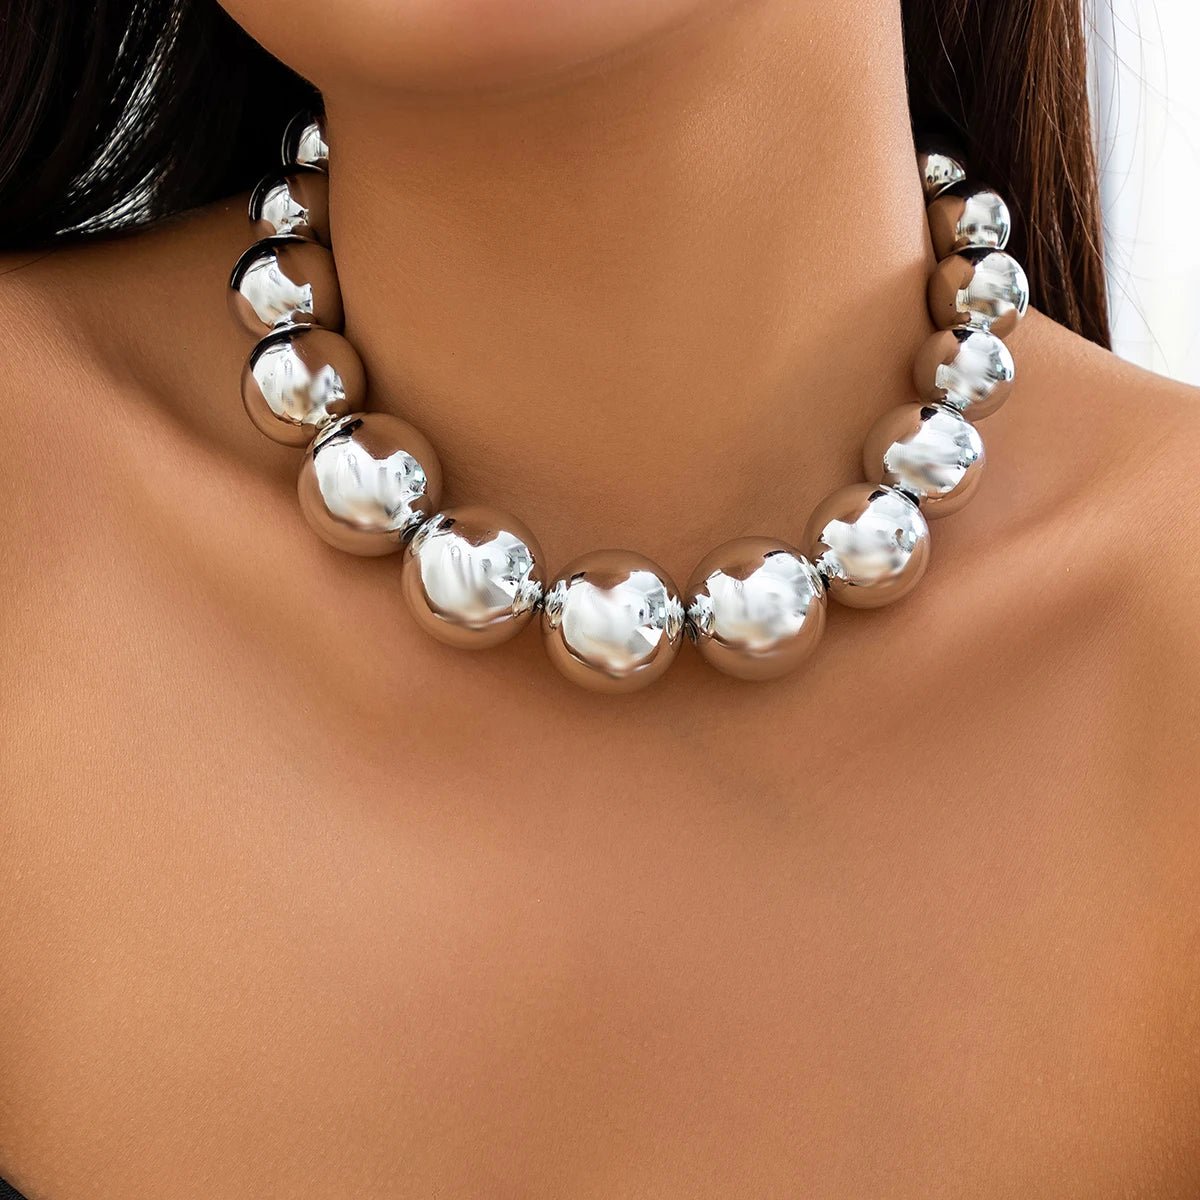 necklace chocker